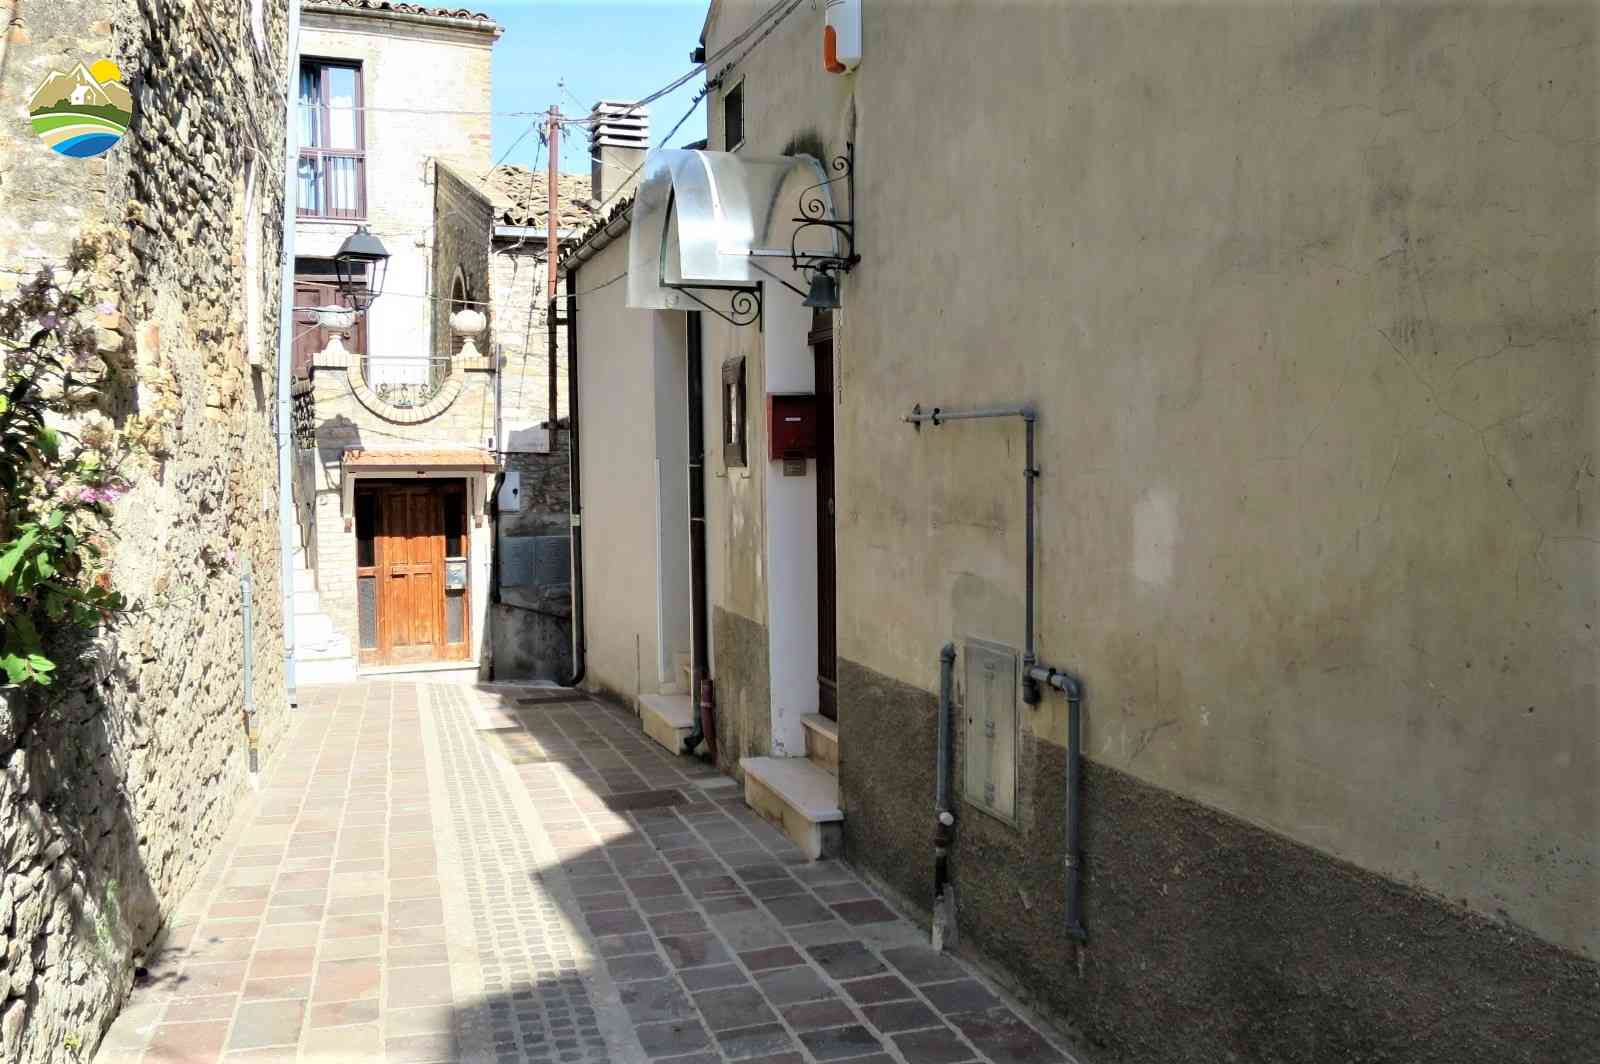 Townhouse Townhouse for sale Montefino (TE), Casa del Borgo - Montefino - EUR 80.438 510